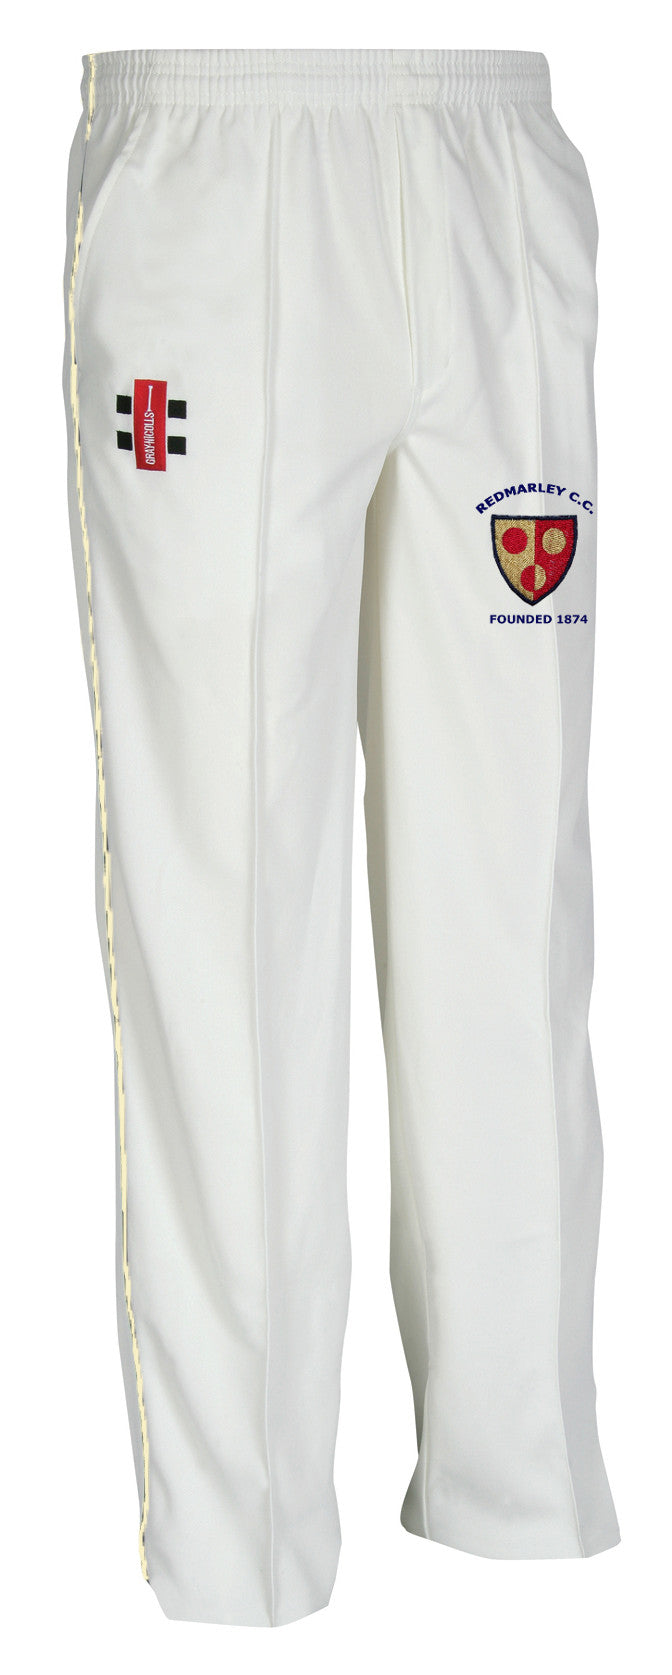 Redmarley CC Matrix Cricket Trouser